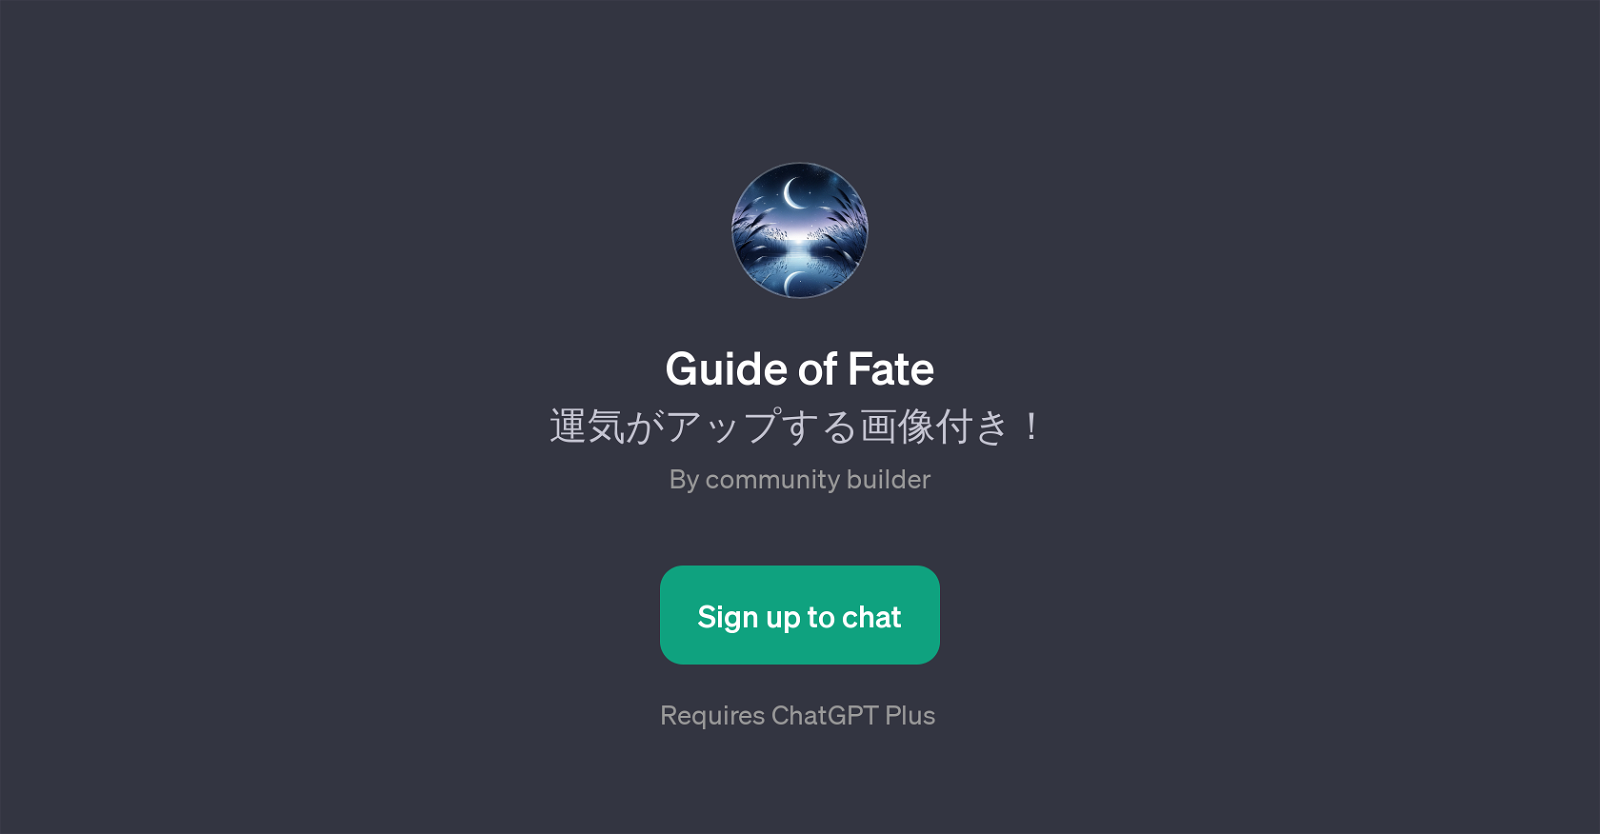 Guide of Fate website